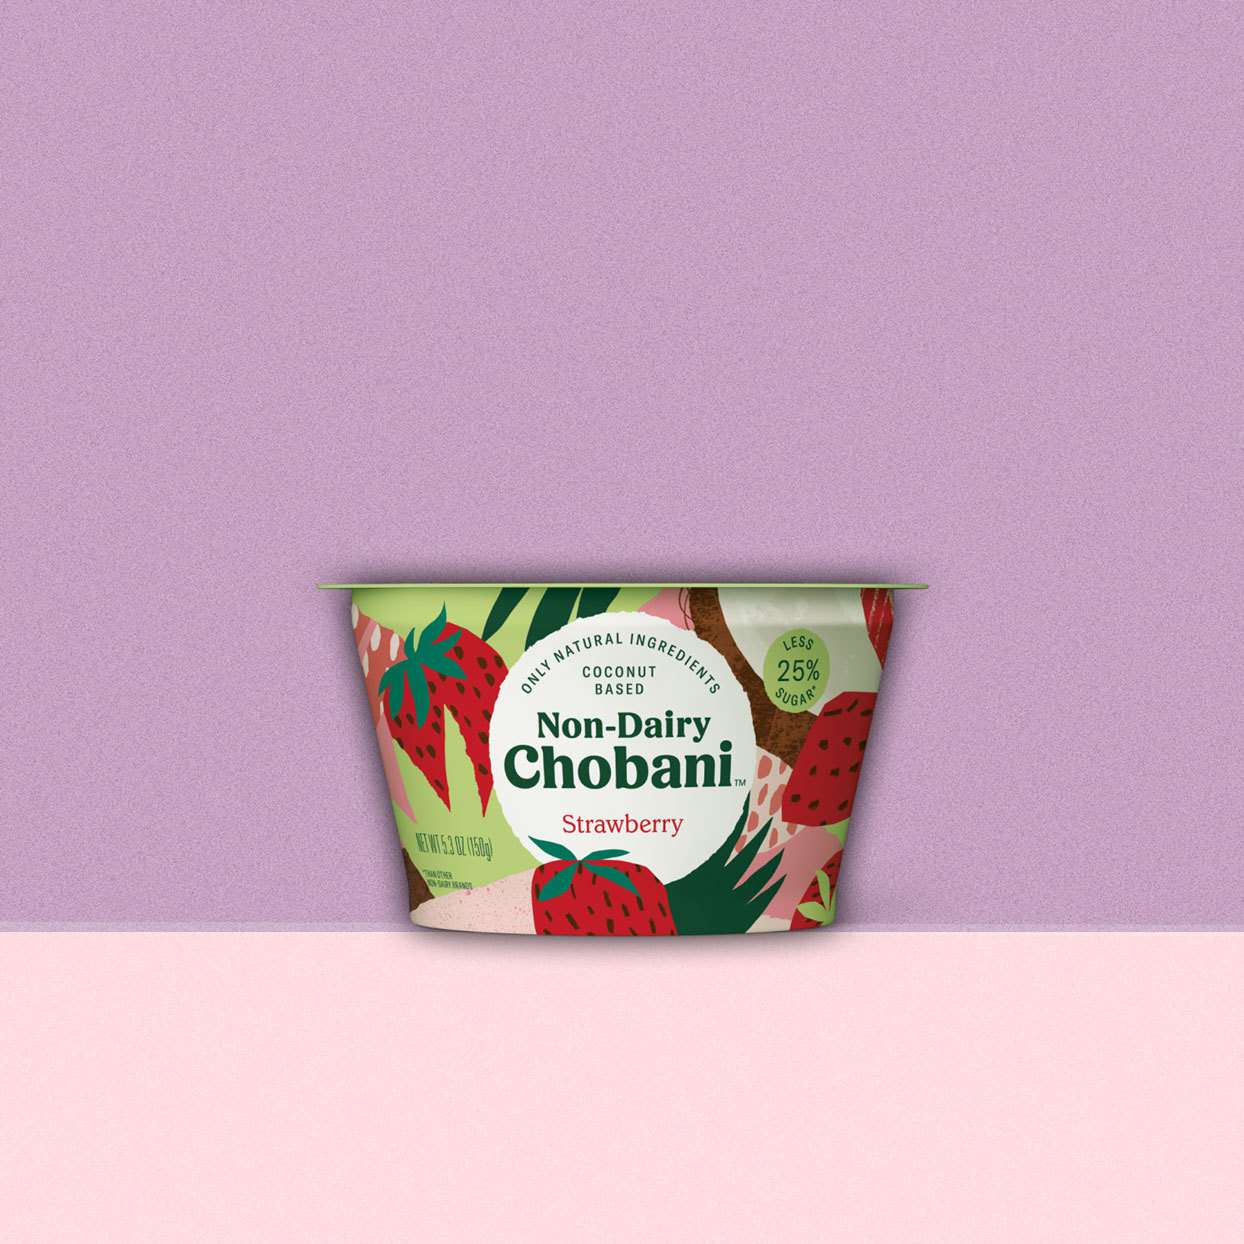 Chobani brand Non-Dairy Coconut Based Strawberry Yogurt